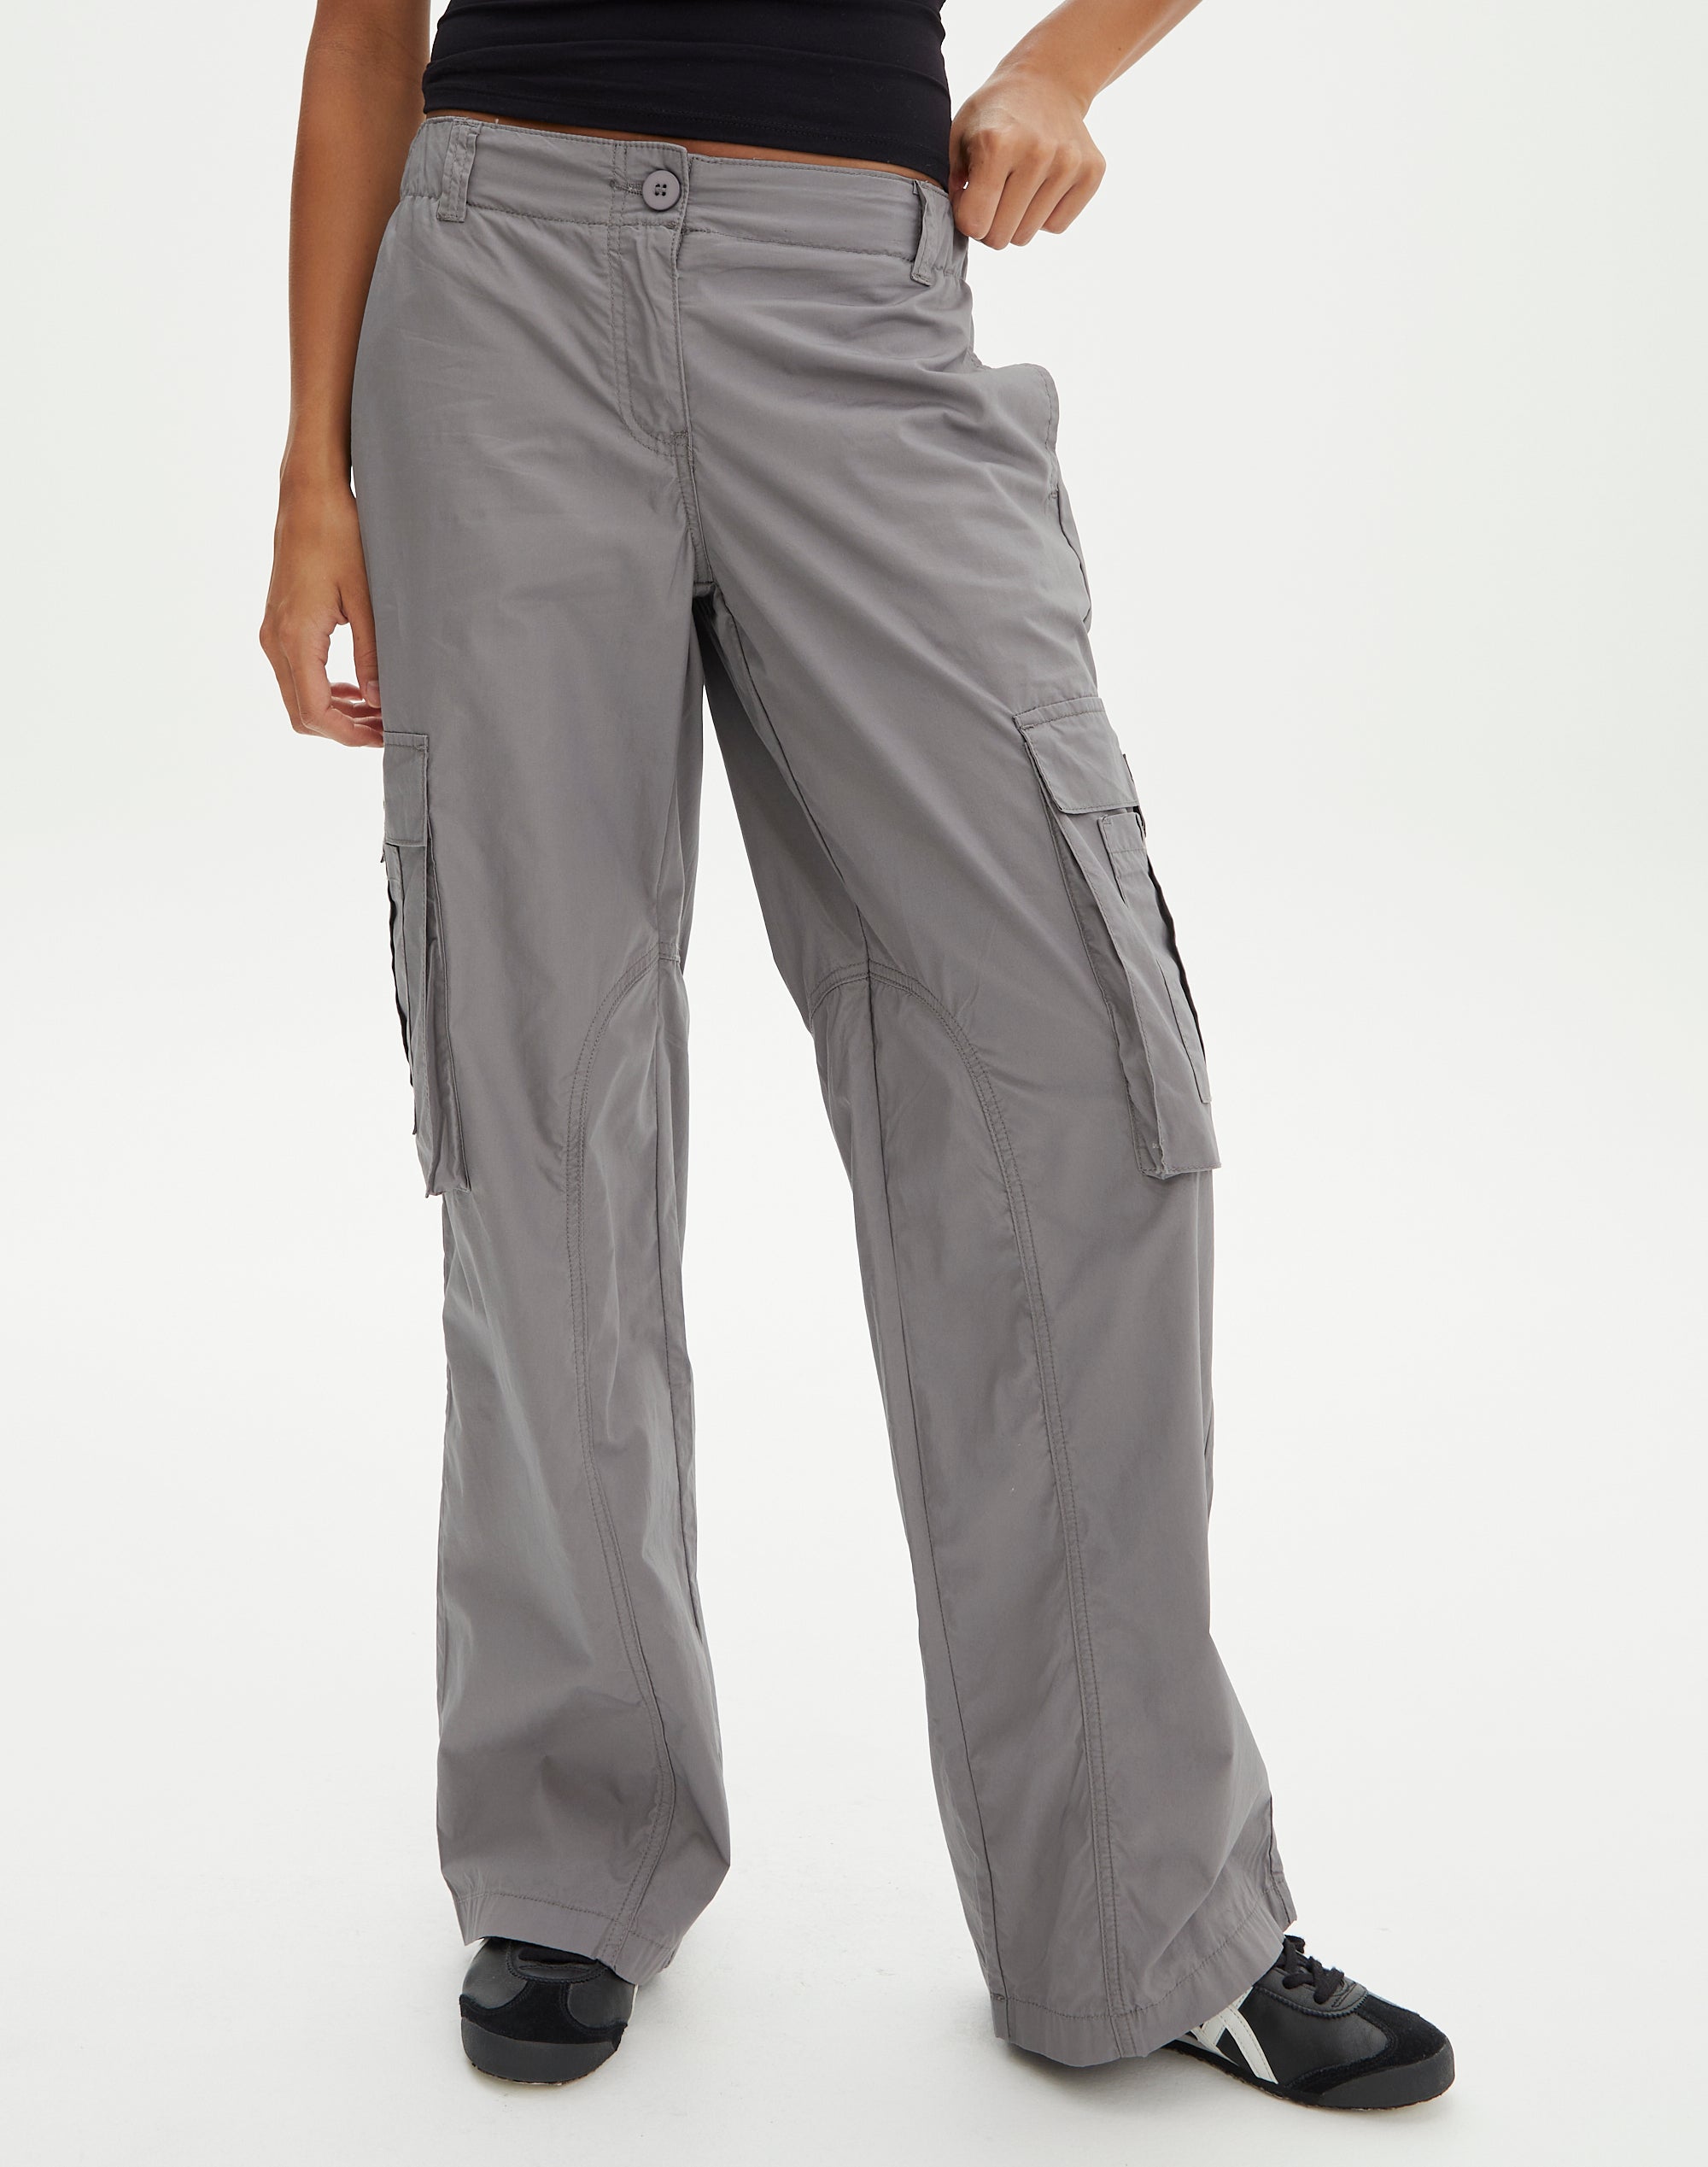 Buy Krystle Men's Dark Grey Cotton Slim fit Cargo Pant at Amazon.in